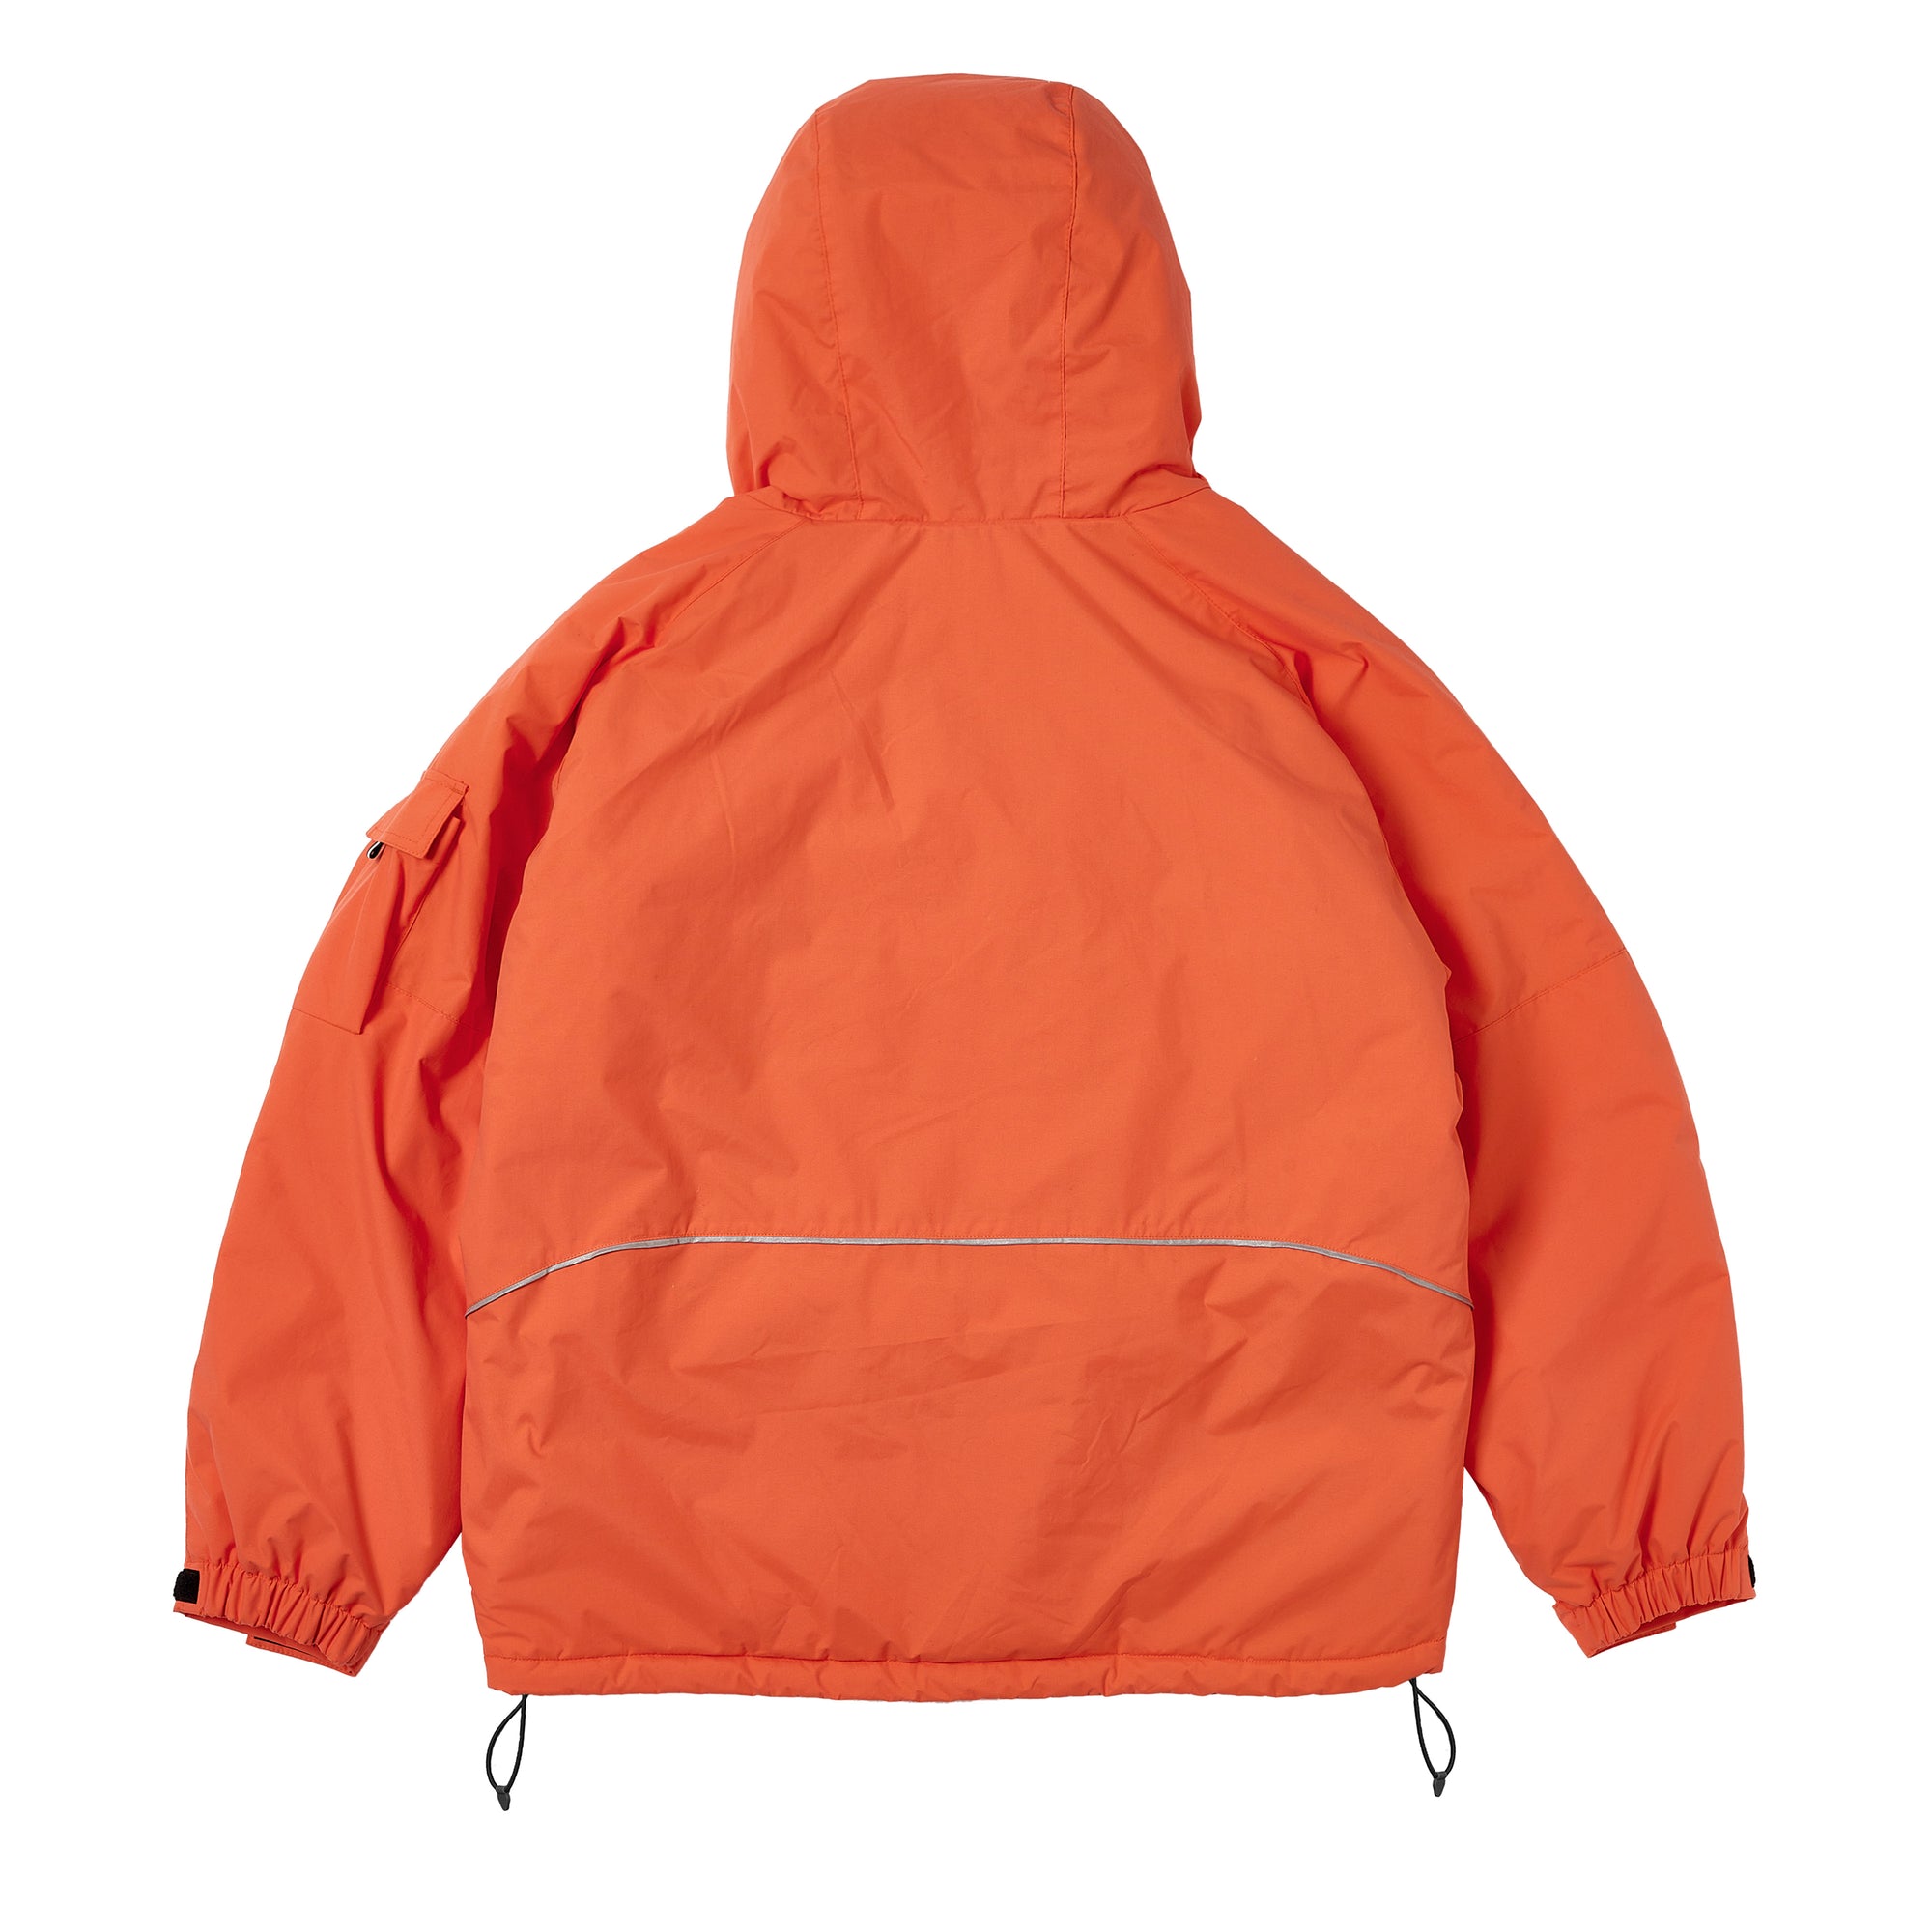 Palace - Men's P-Tech Hooded Jacket - (Orange) view 4